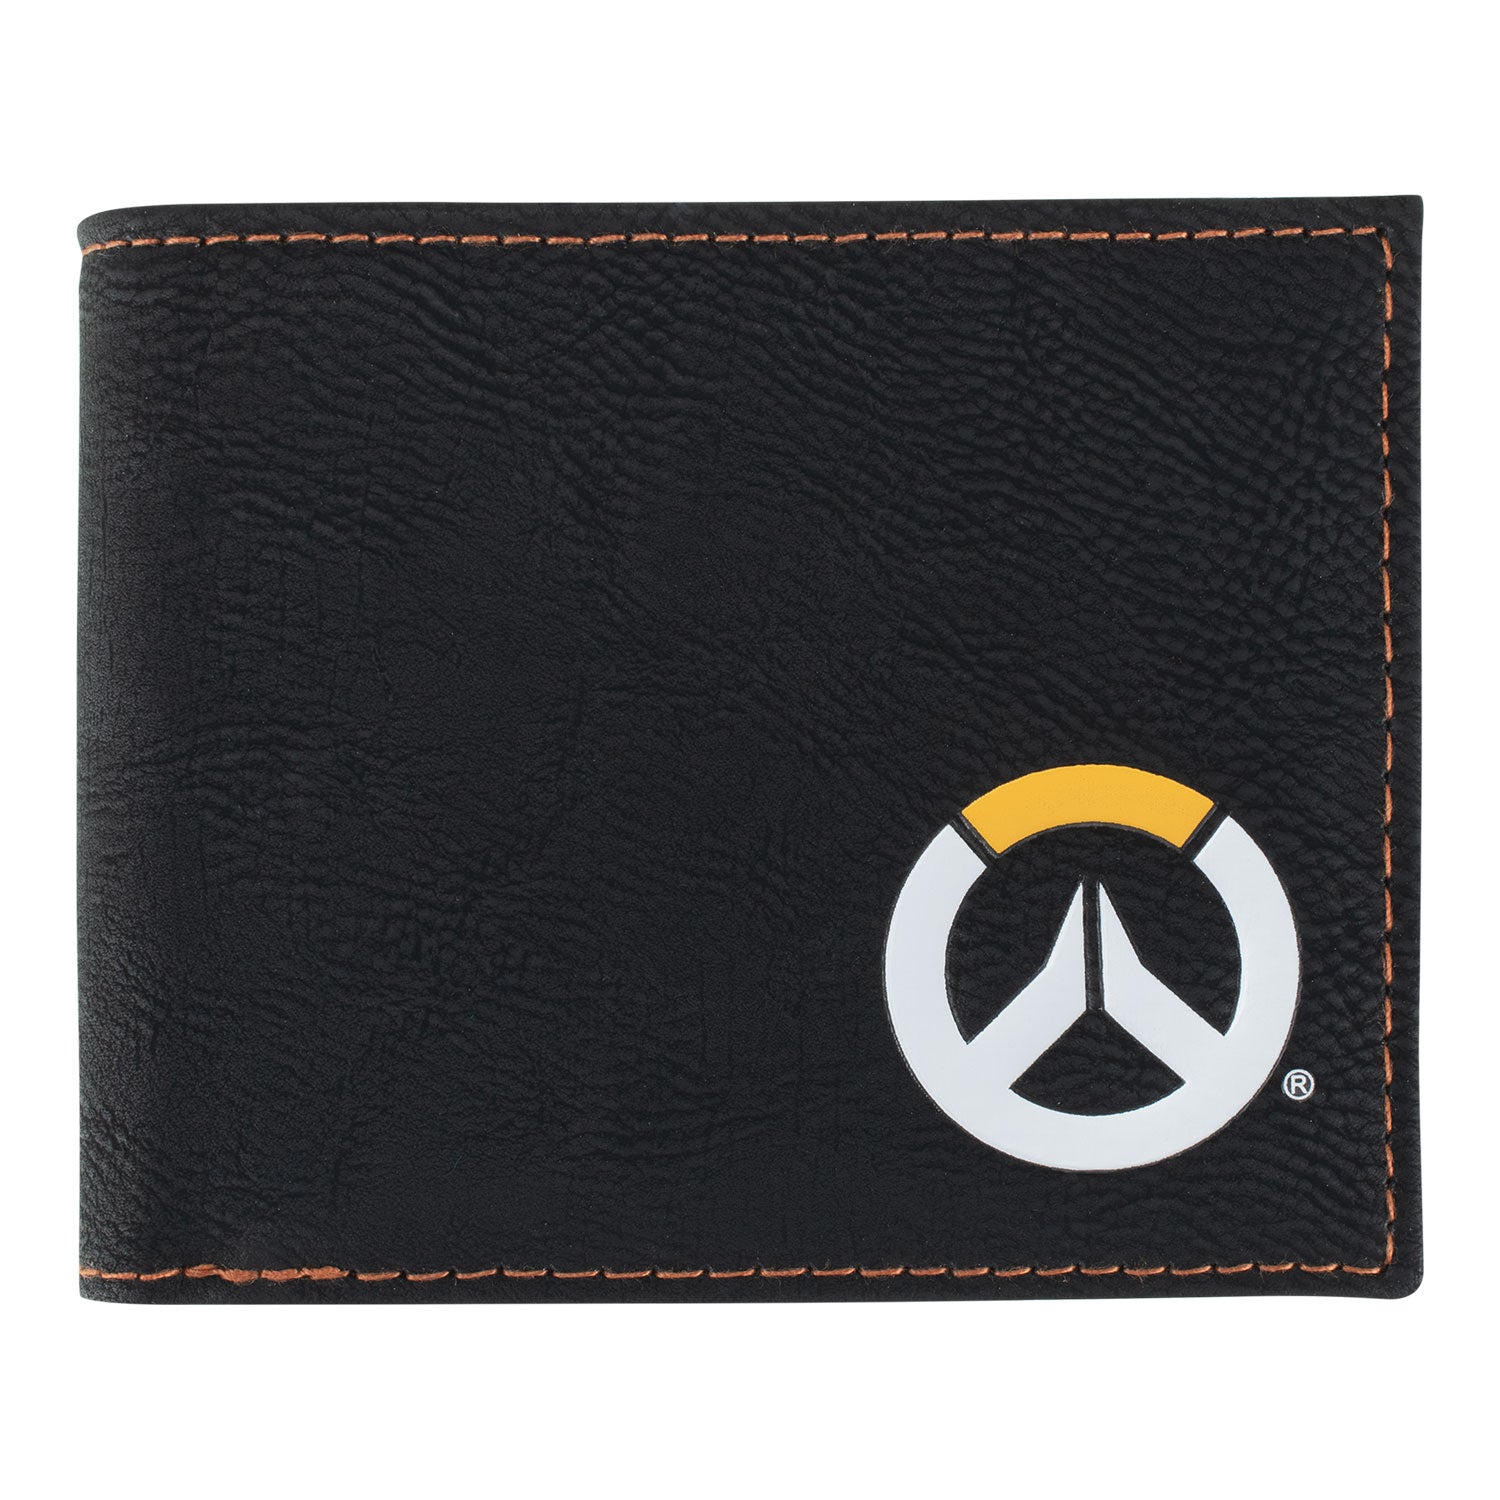 Overwatch Logo Black Wallet - Front View